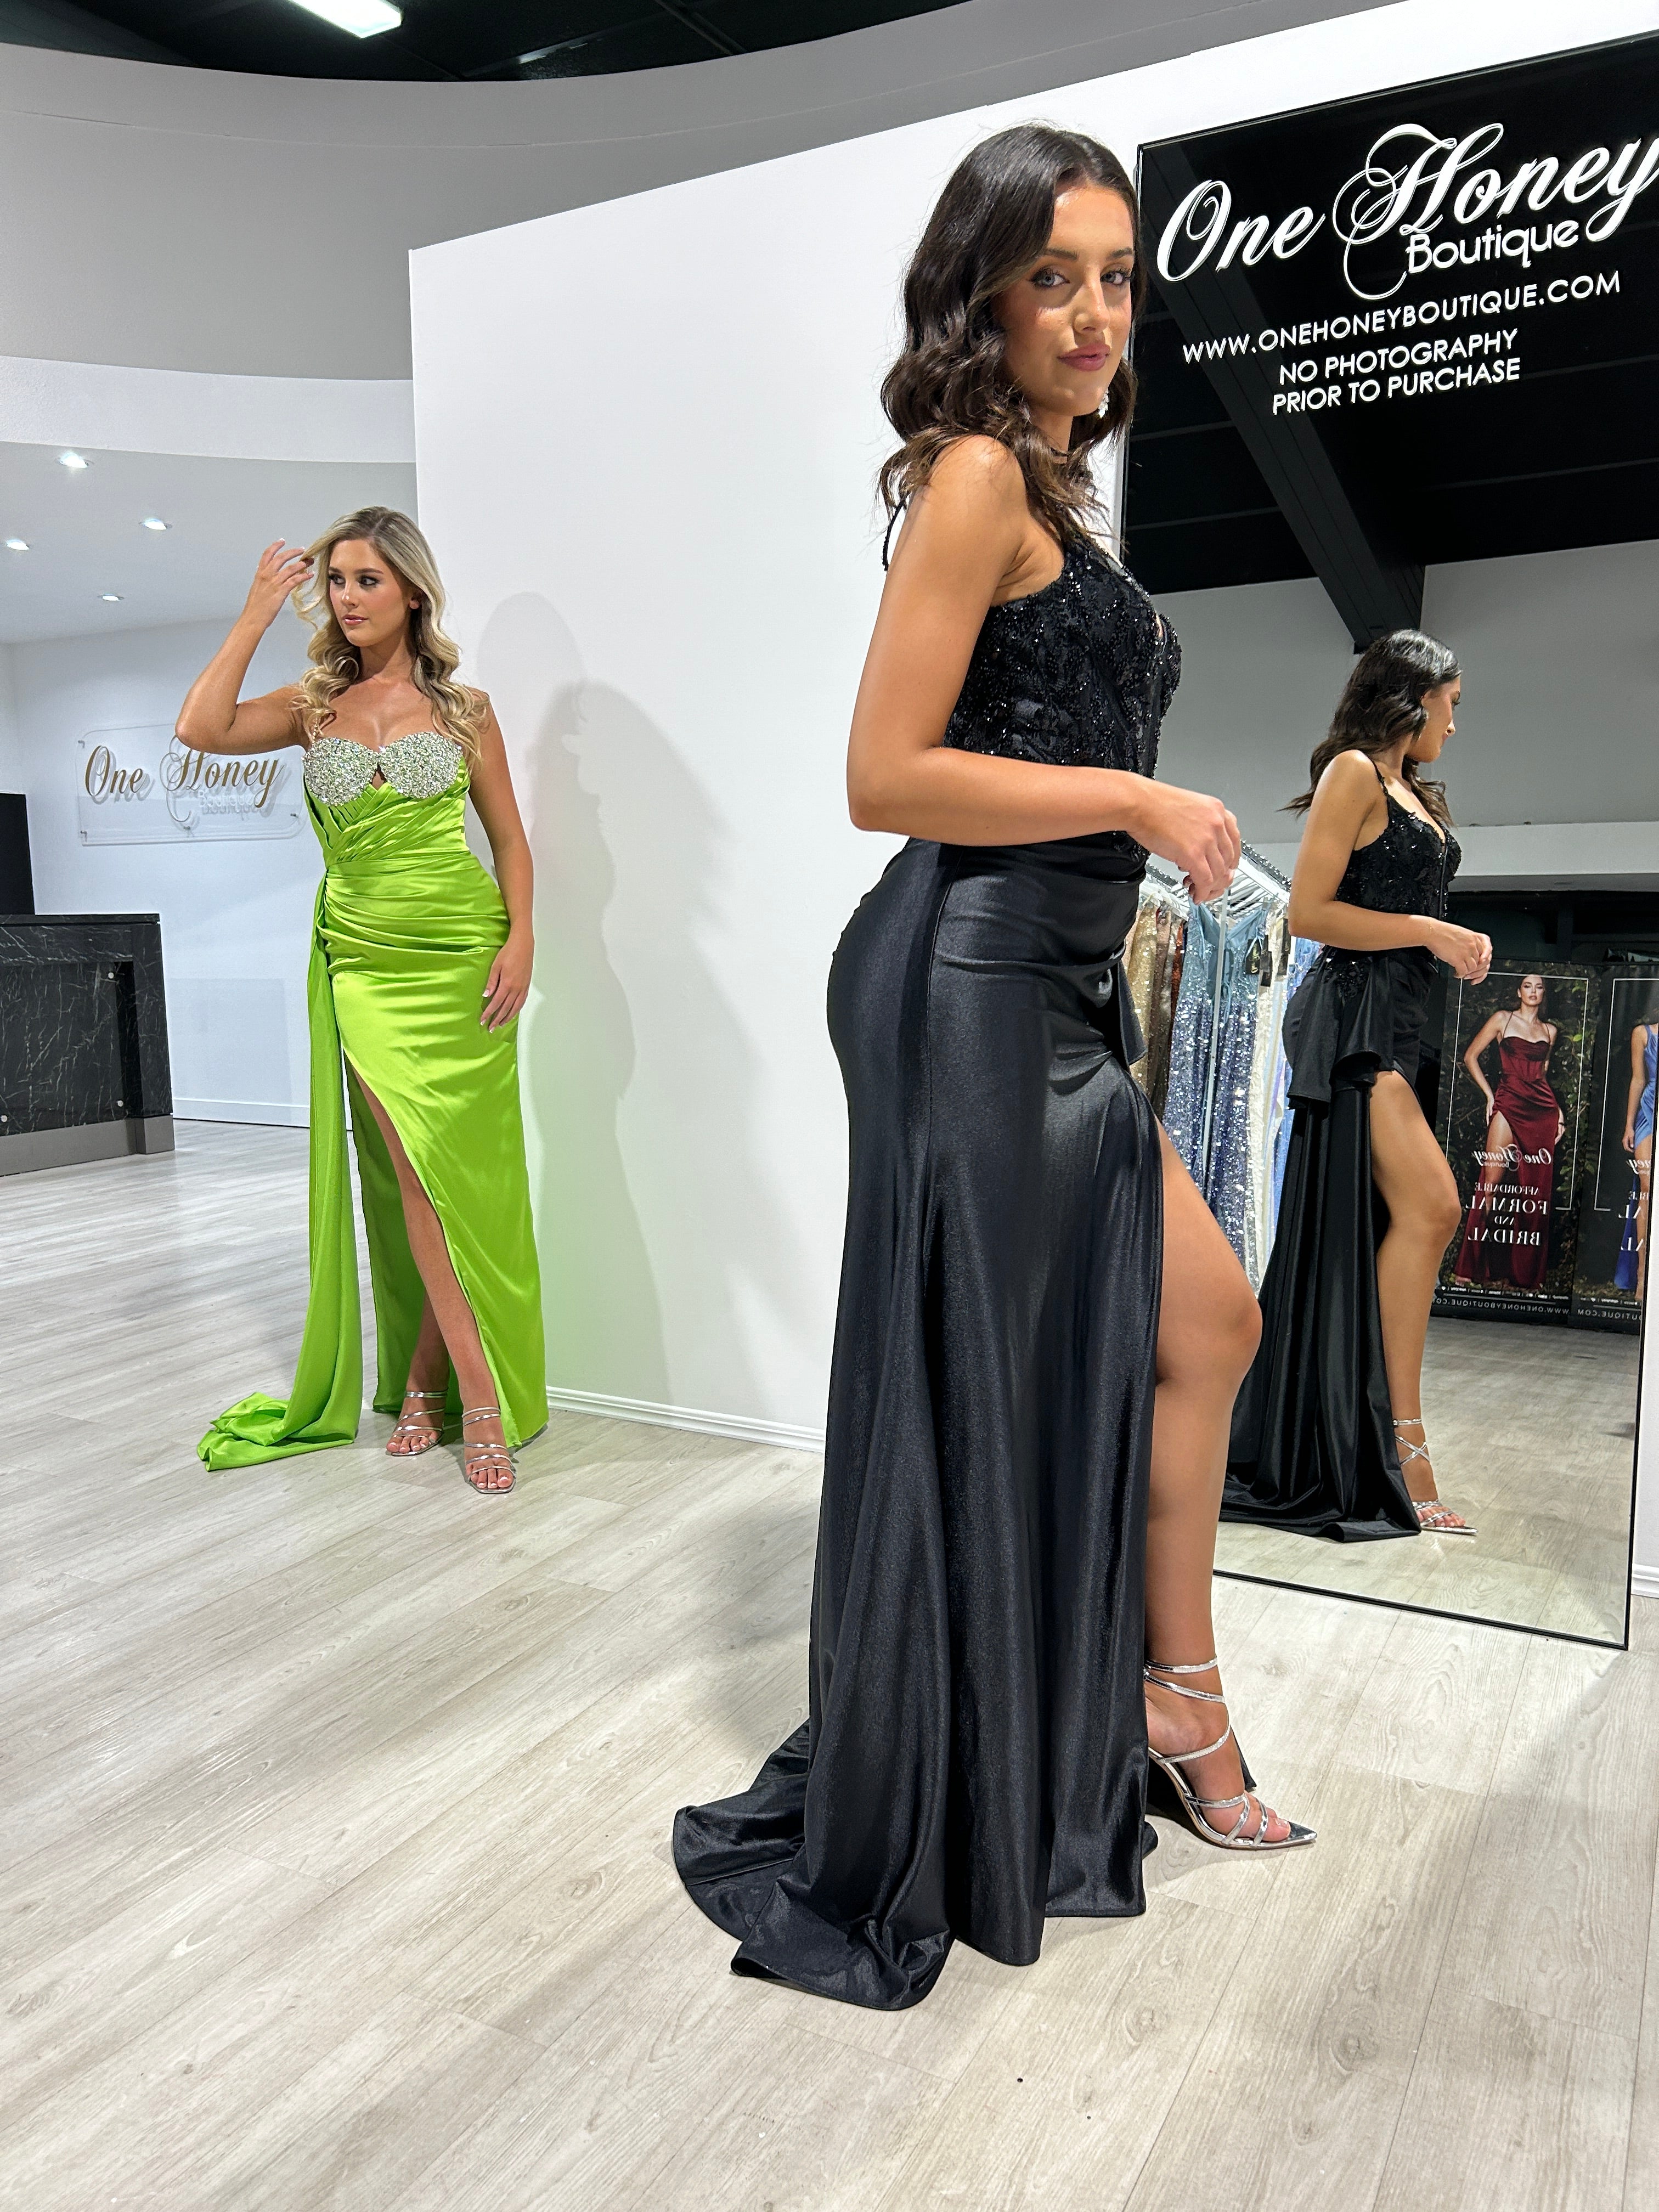 Honey Couture JAMILLA Black Satin Beaded Detail Corset Bustier Formal Dress